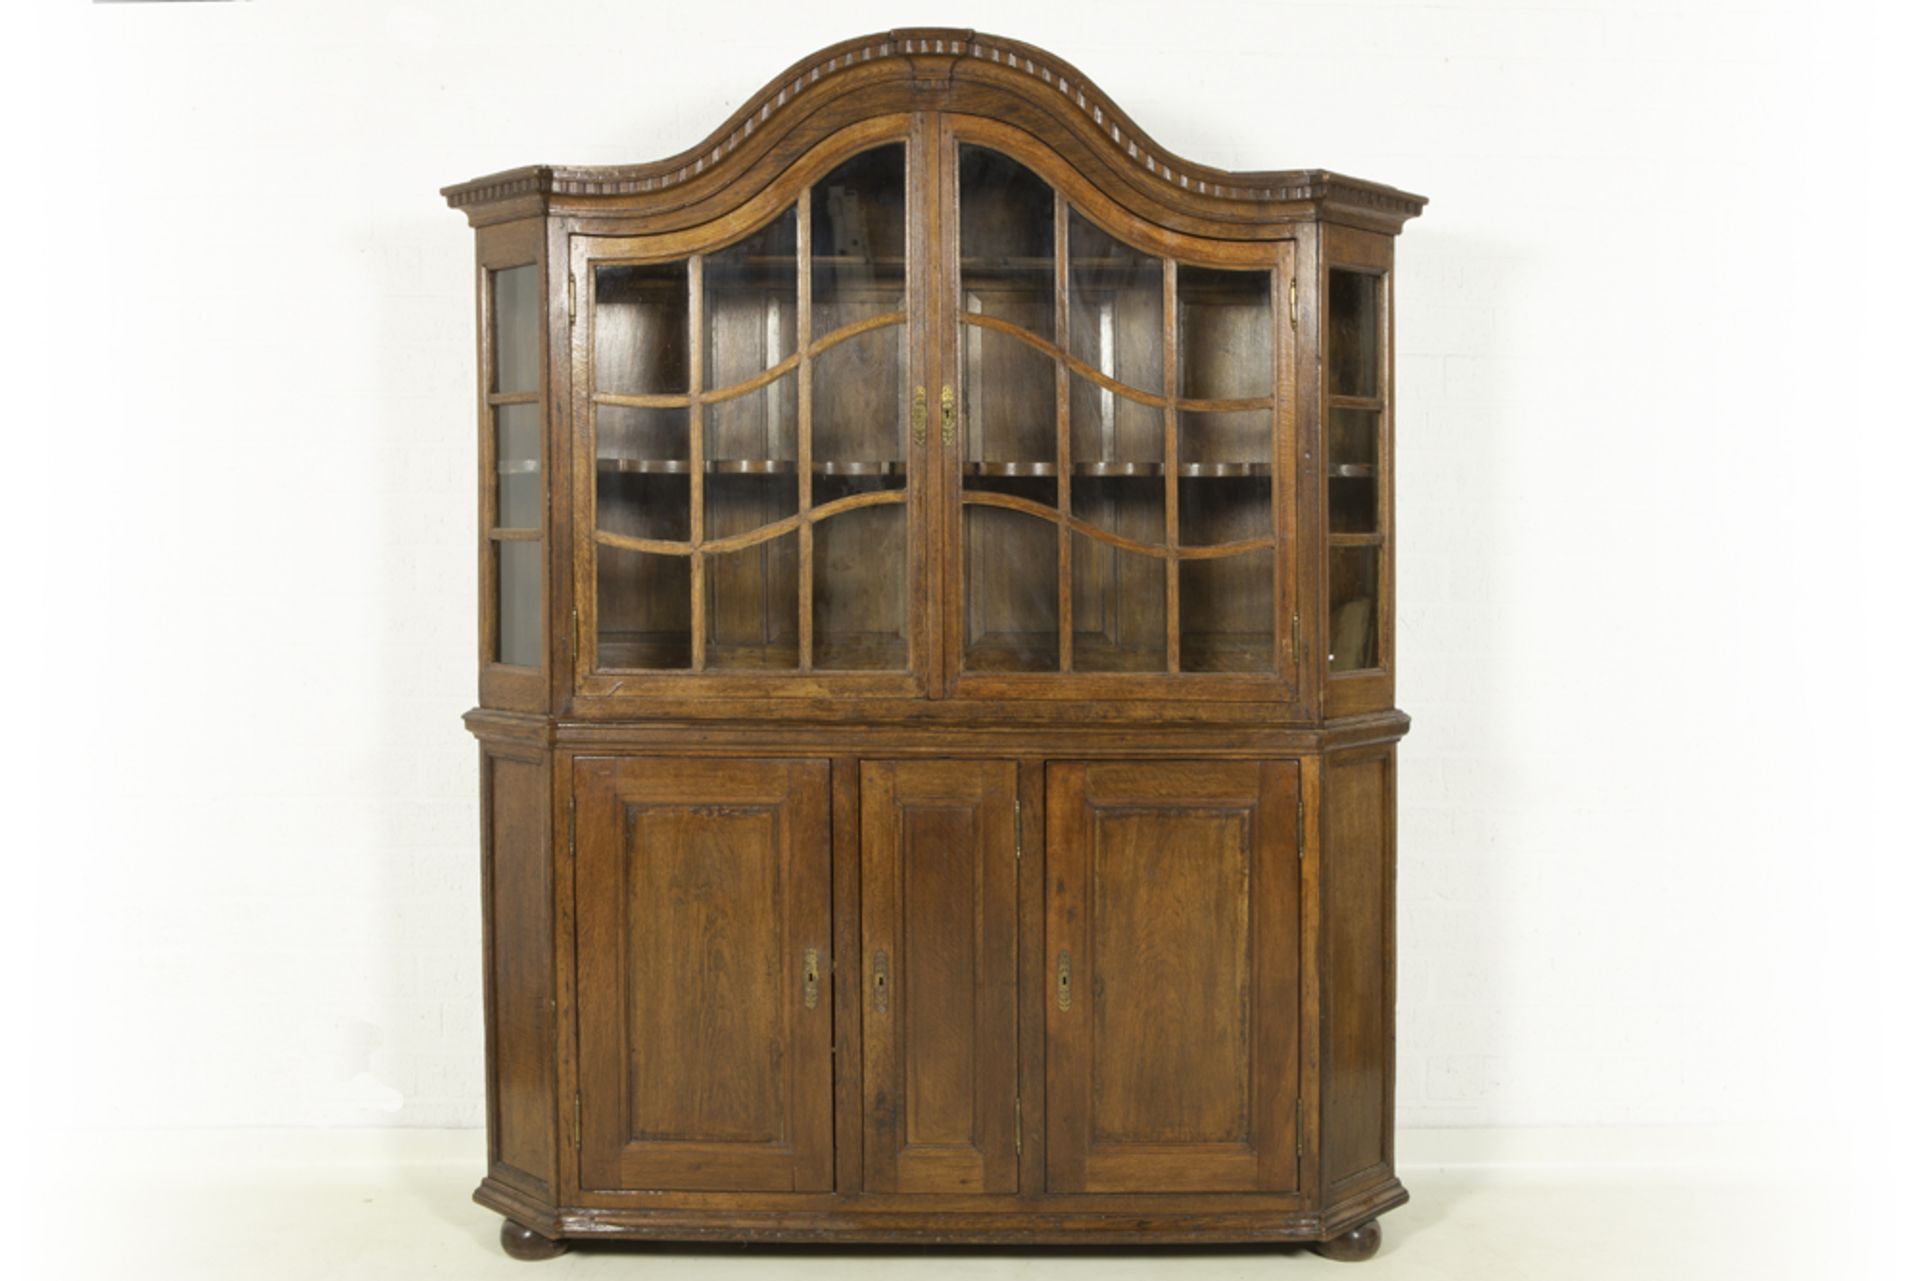 18th Cent. German oak armoire || Achttiende eeuwse Duitse tweedeurskast in eik met twee deuren en